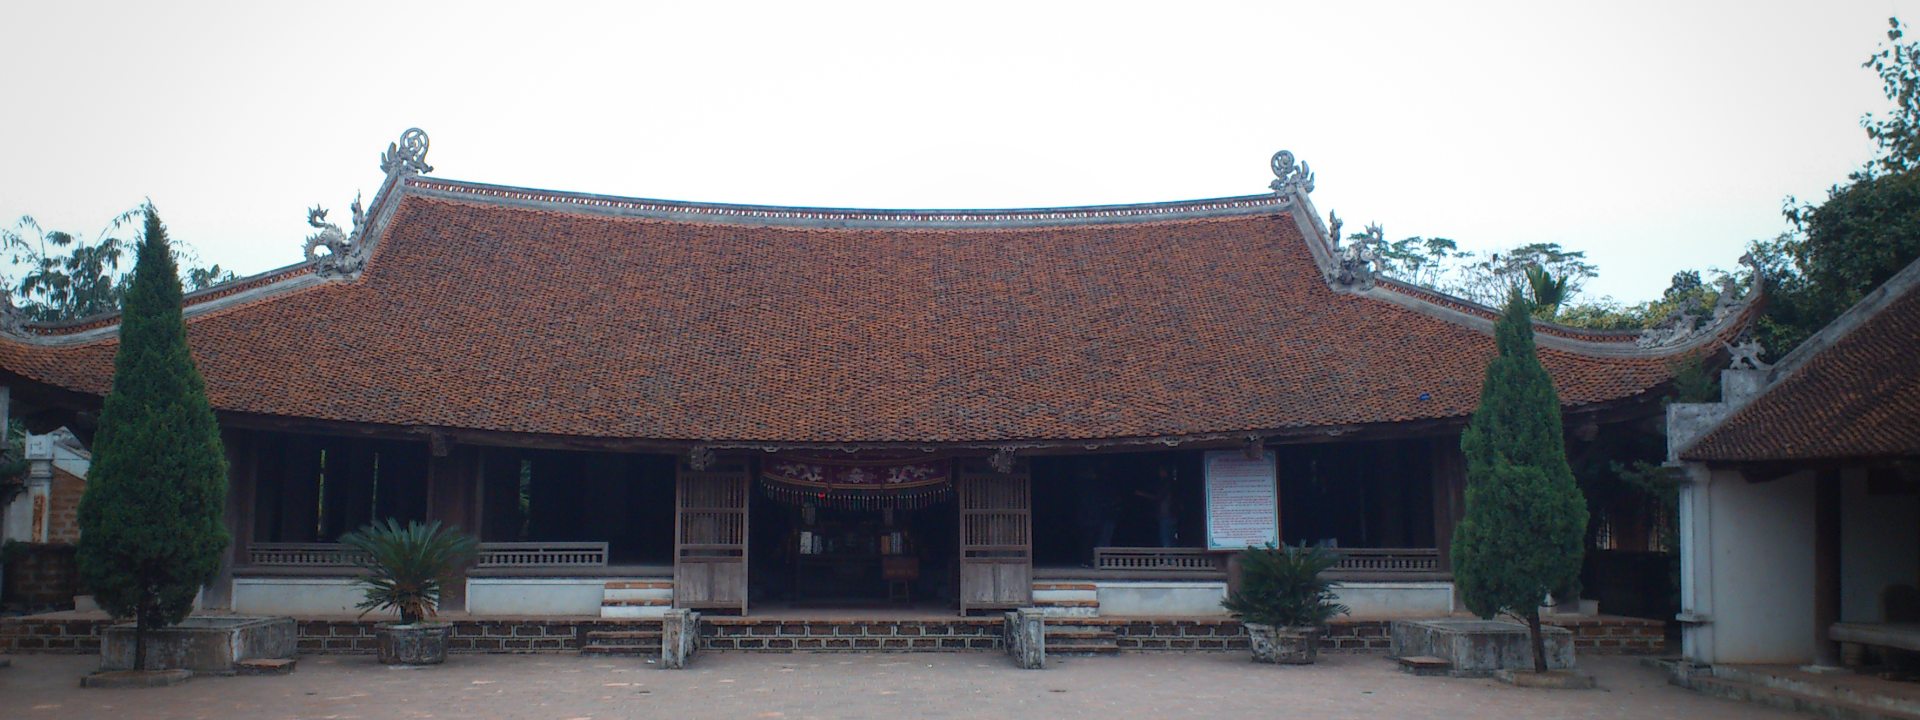 La aldea antigua Duong Lam